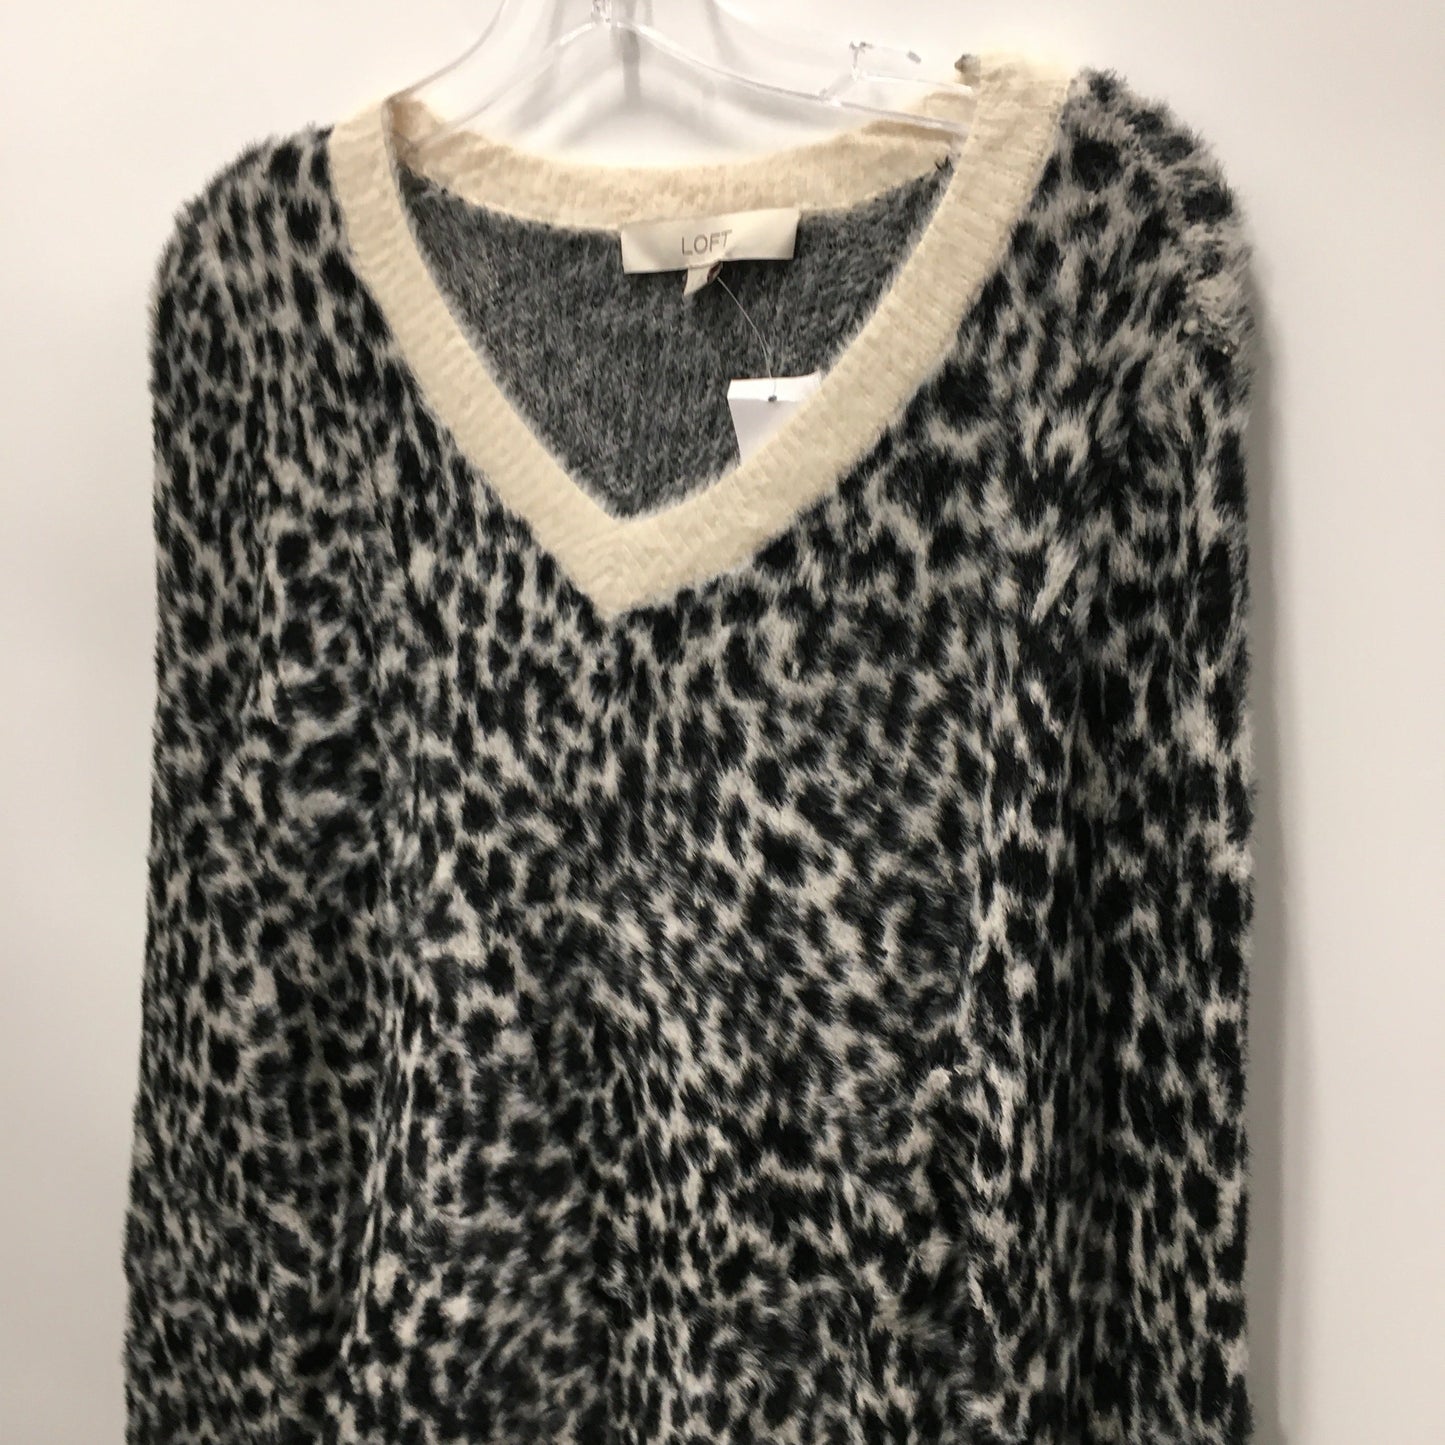 Animal Print Sweater Loft, Size S